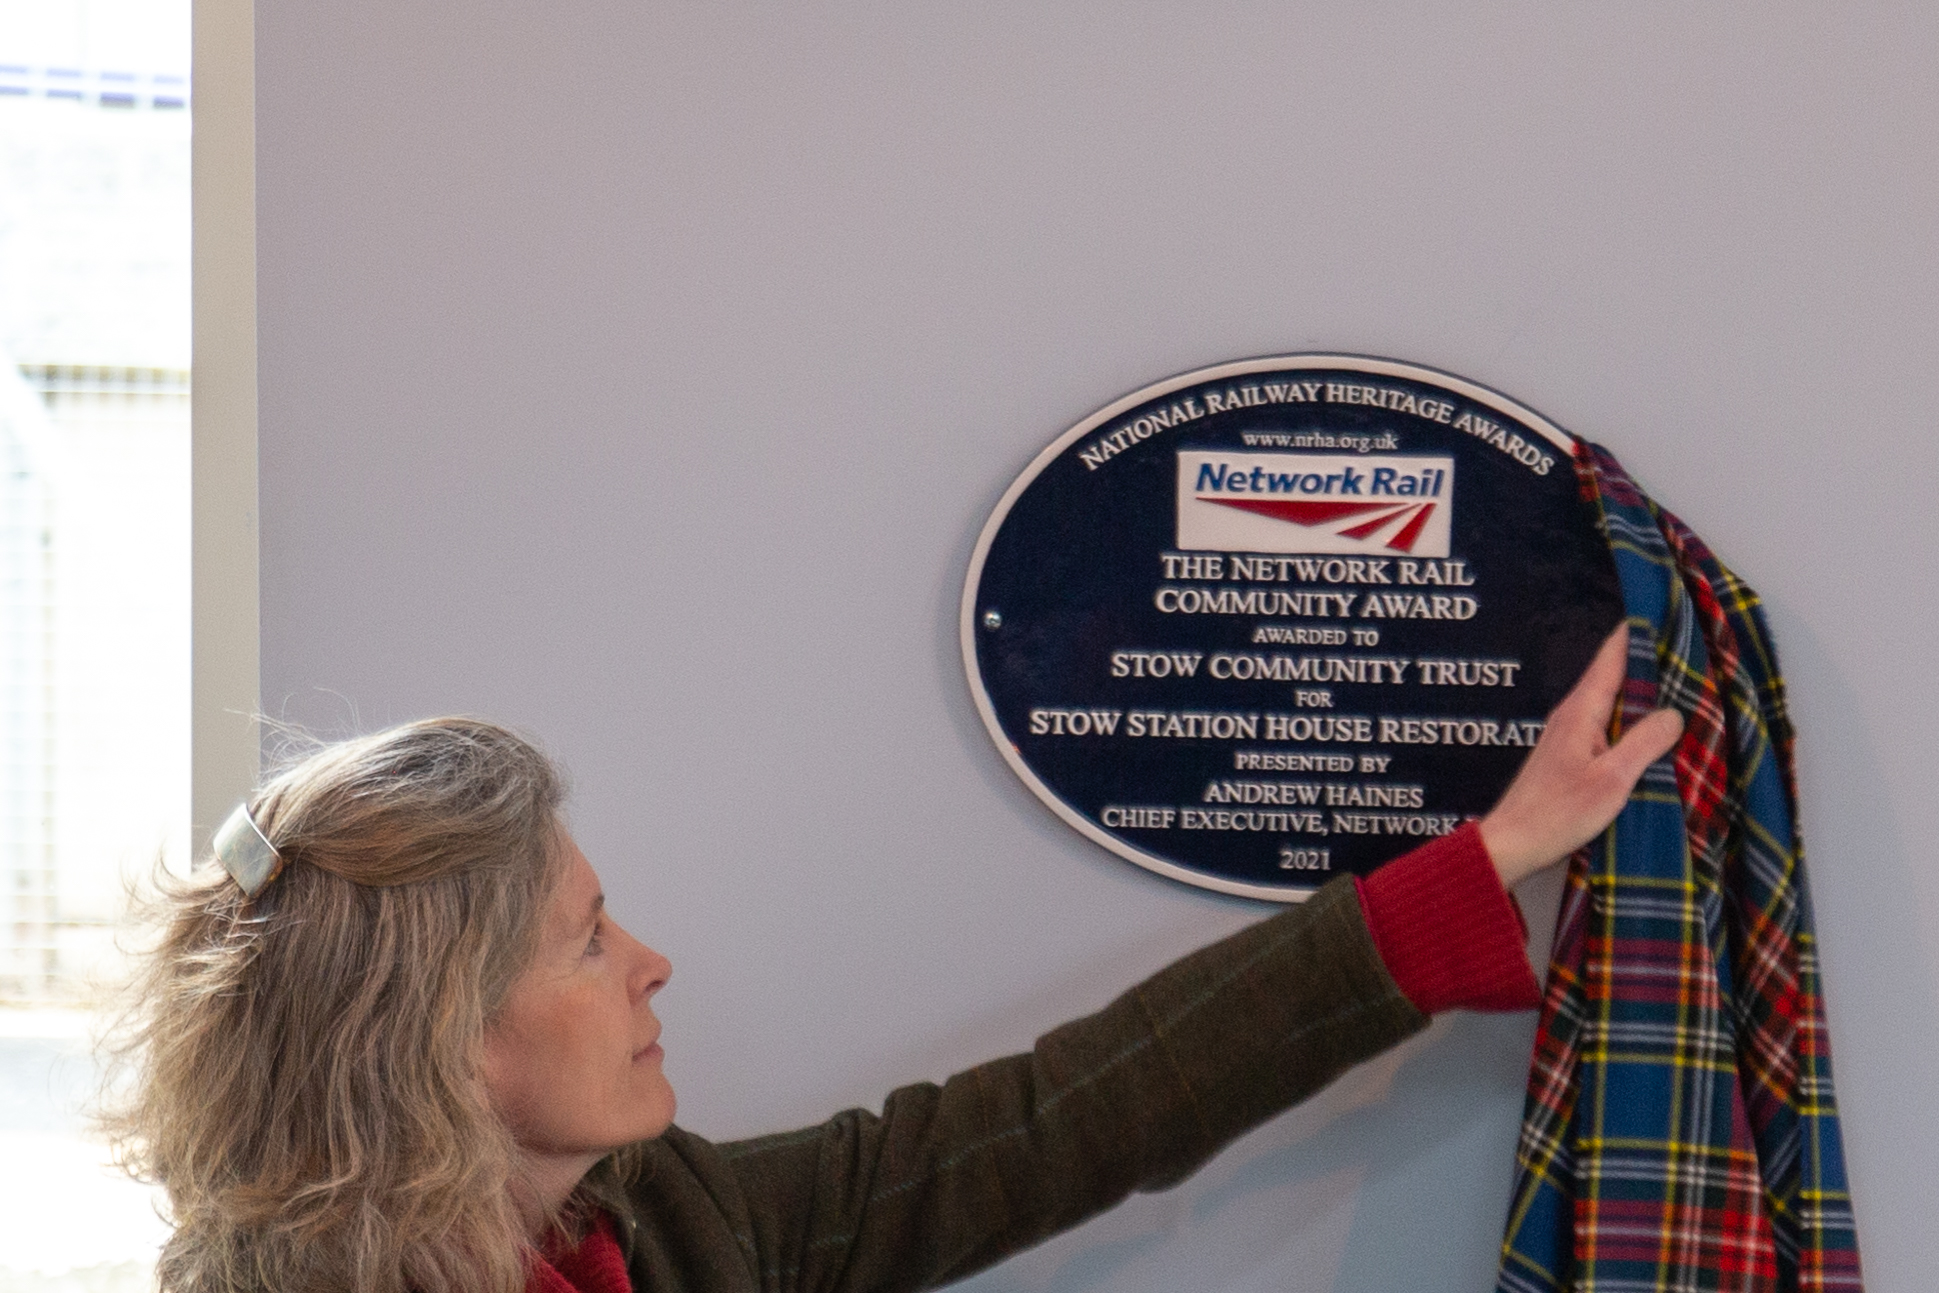 Jo Noble of Network Rail unveiling Network Rail Community Award plaque